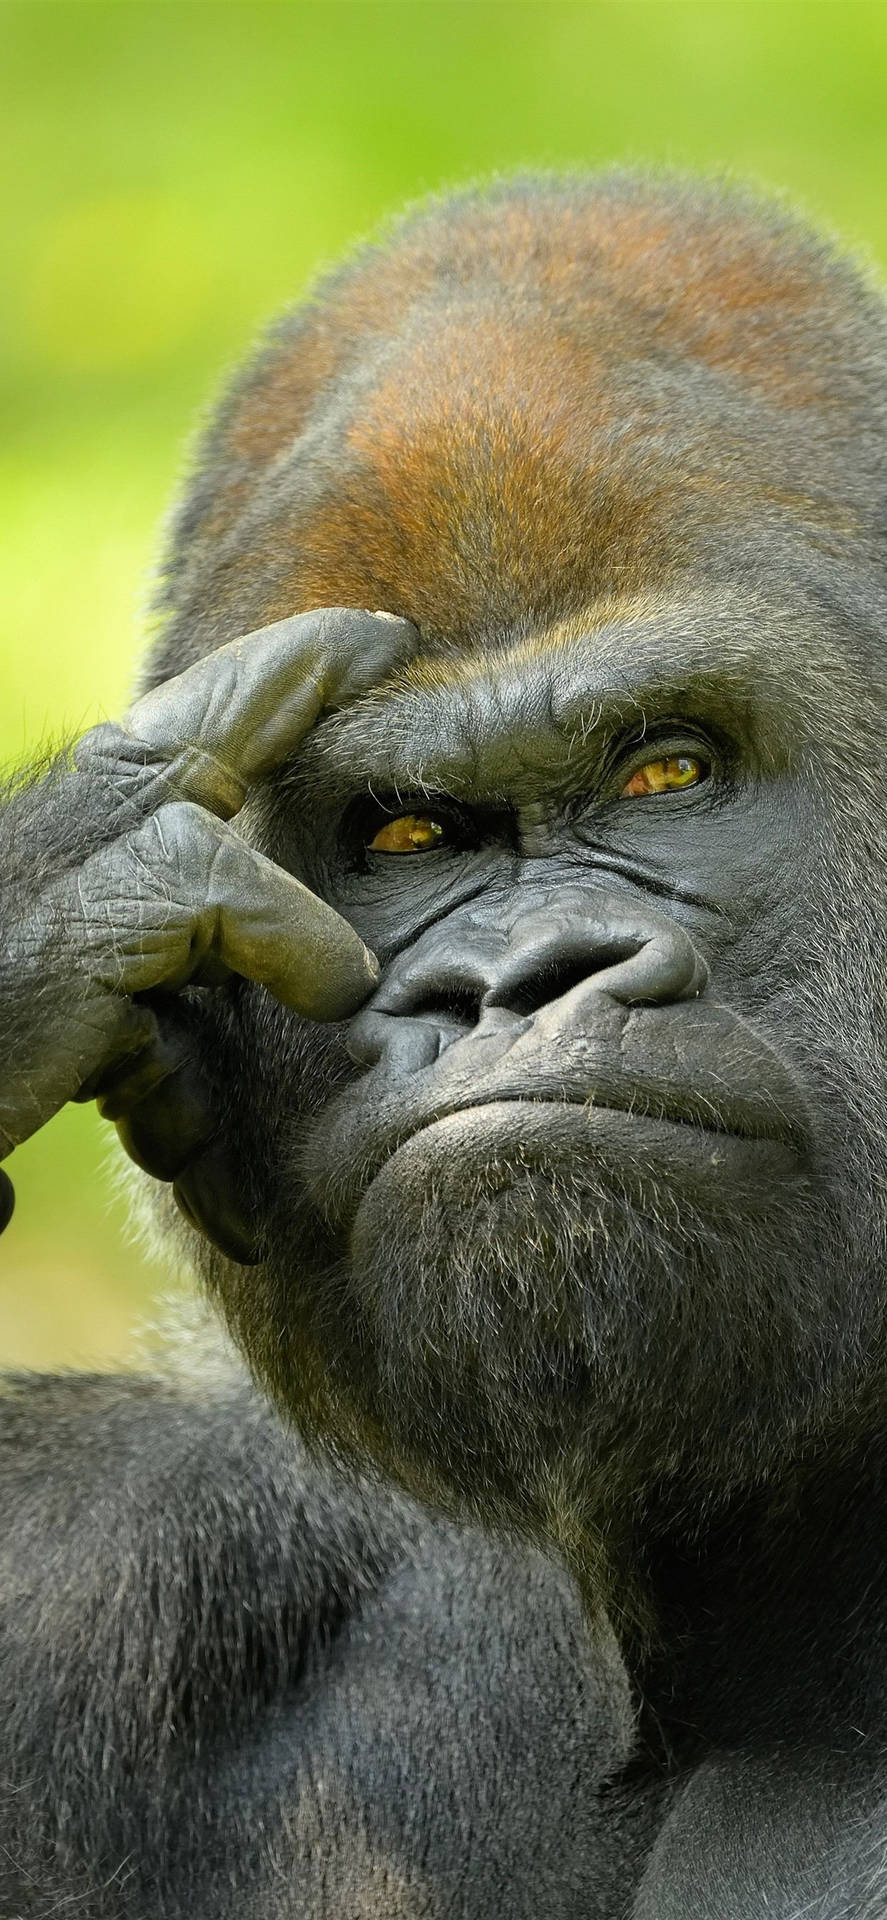 Thinking Gorilla Iphone Wallpaper